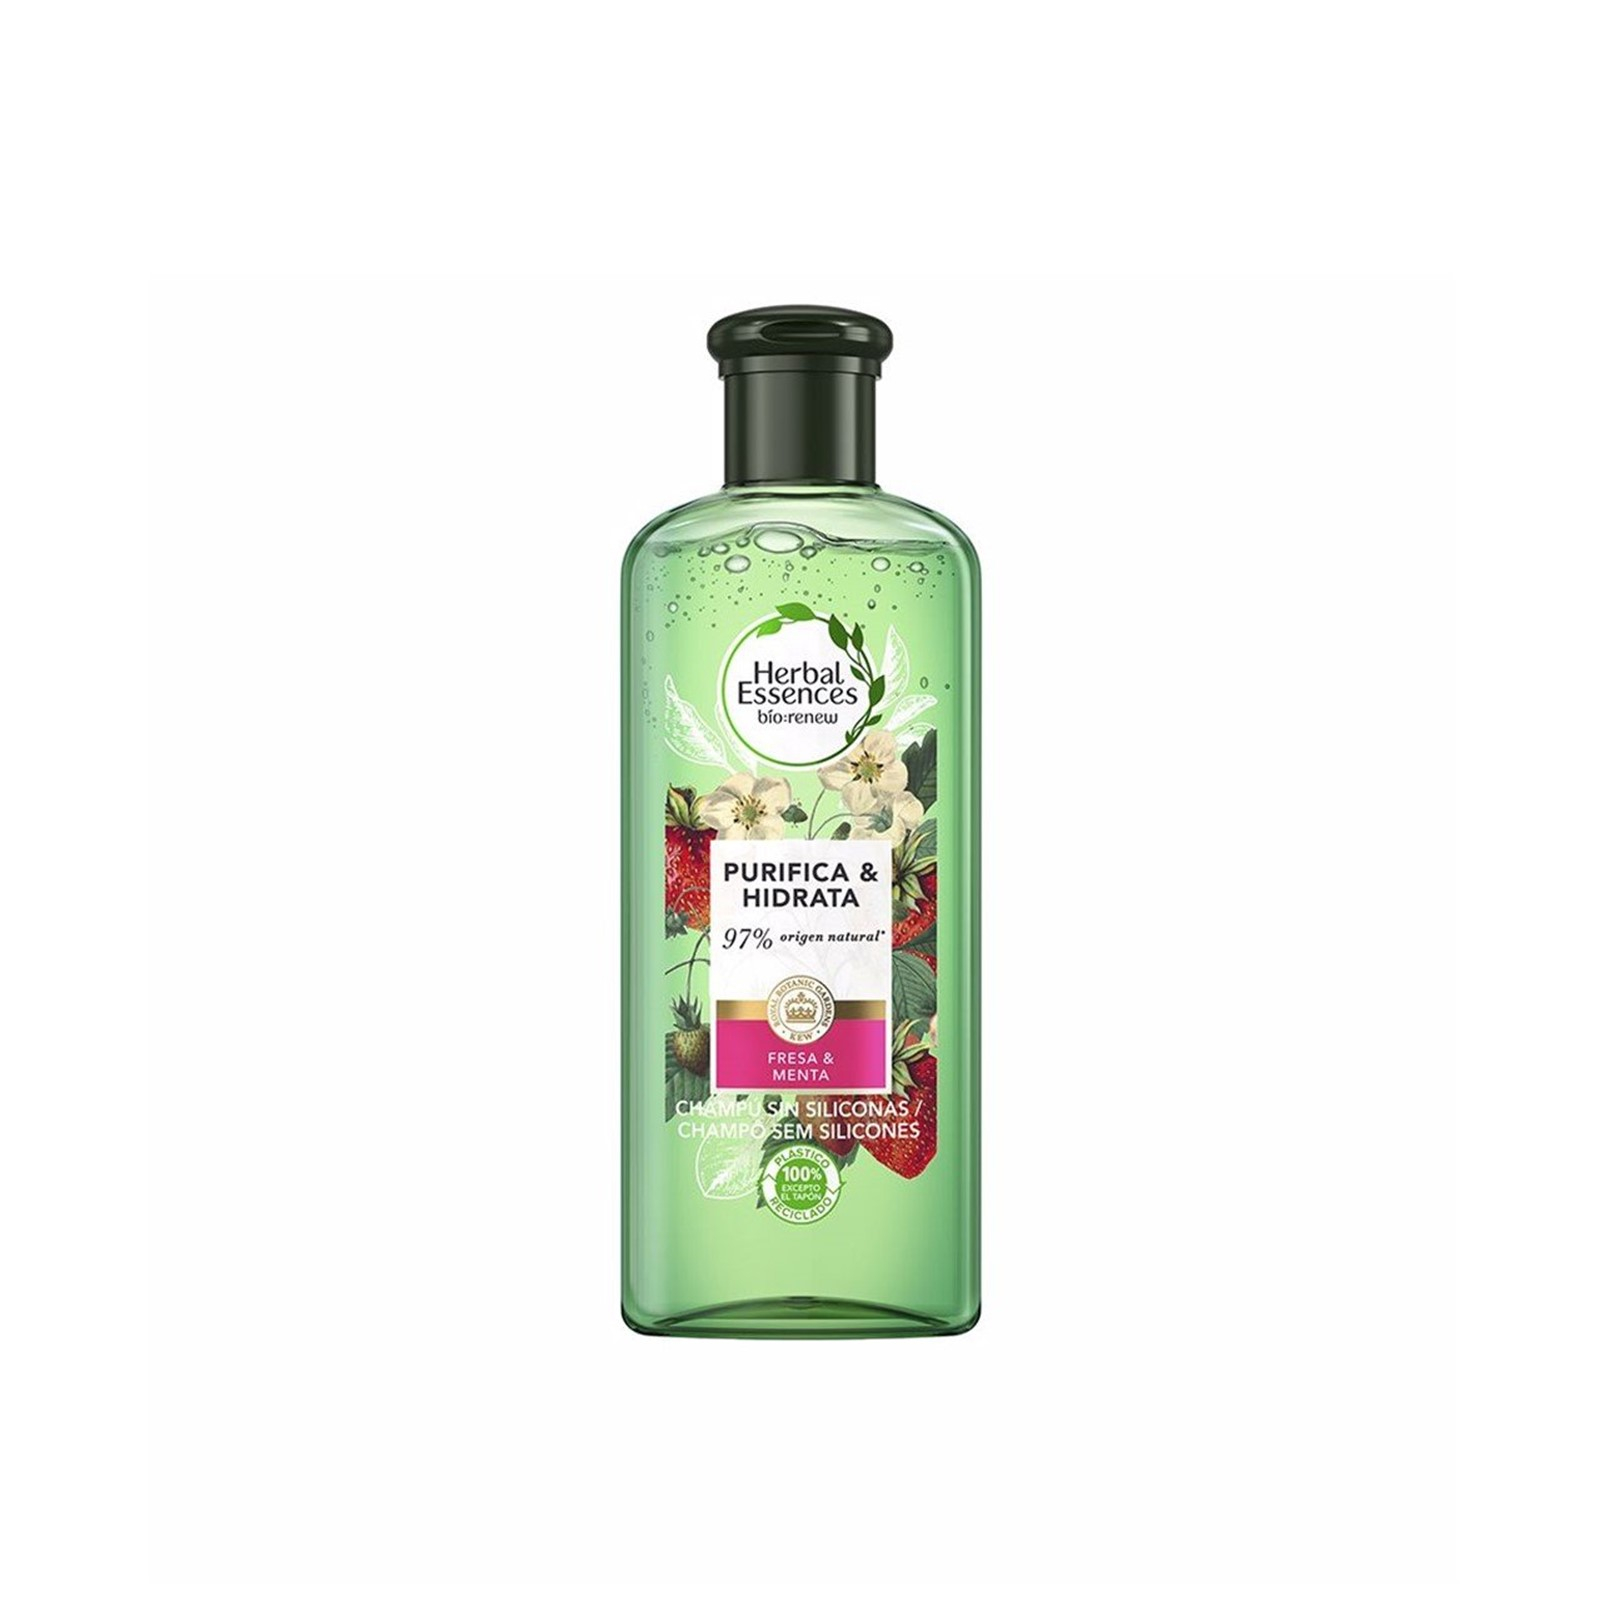 szampon herbal essences bio renew